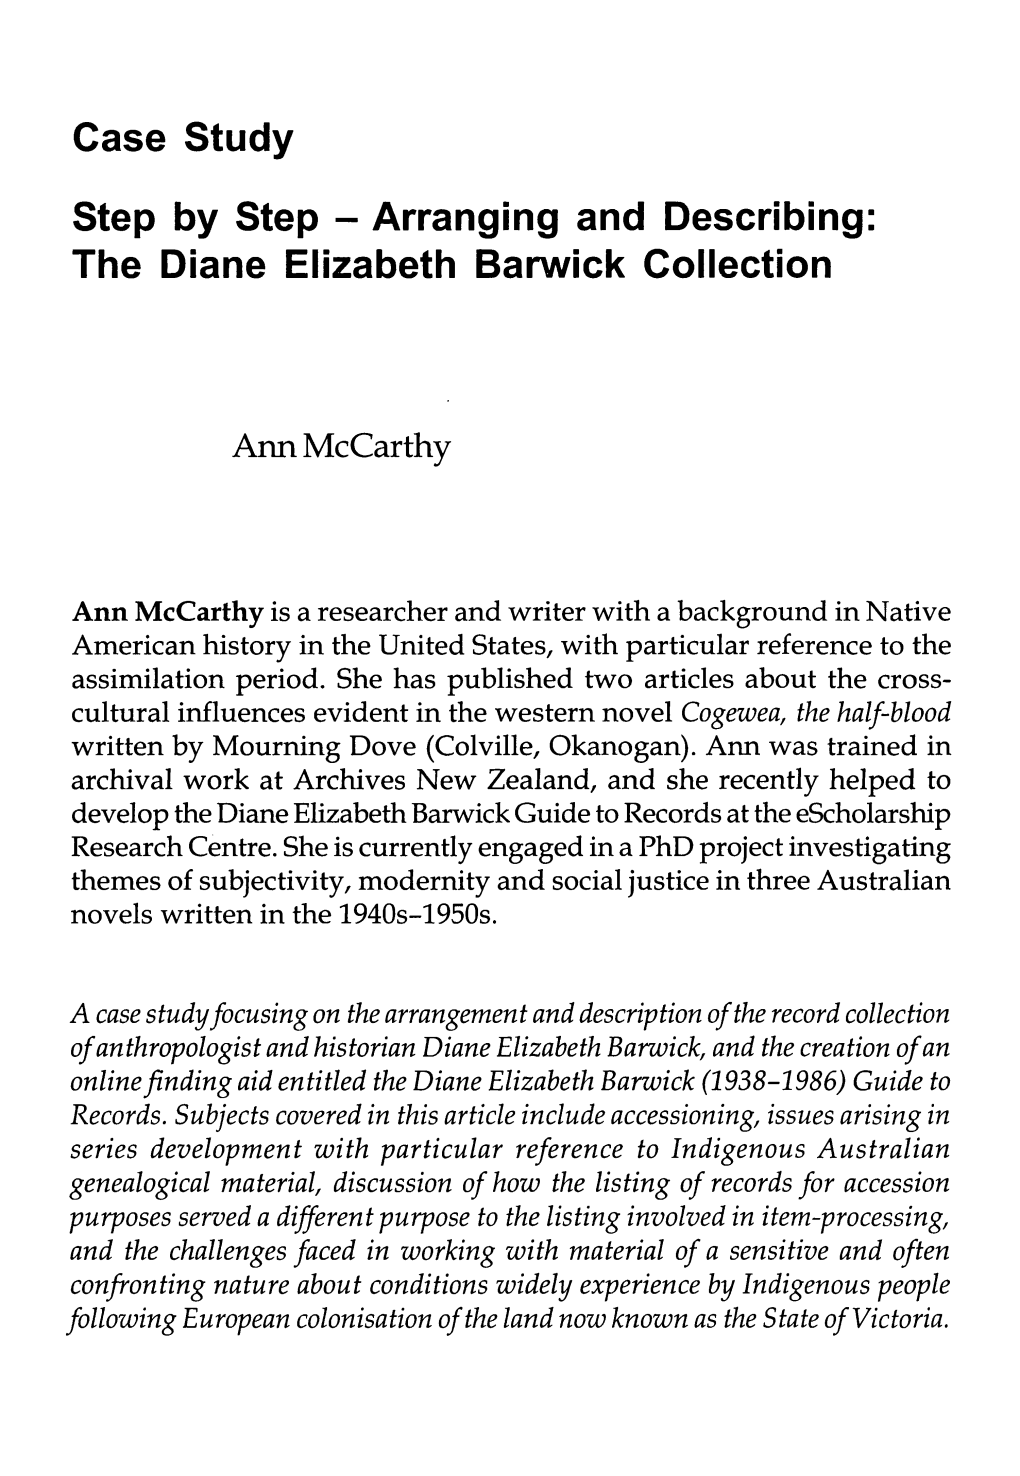 The Diane Elizabeth Barwick Collection